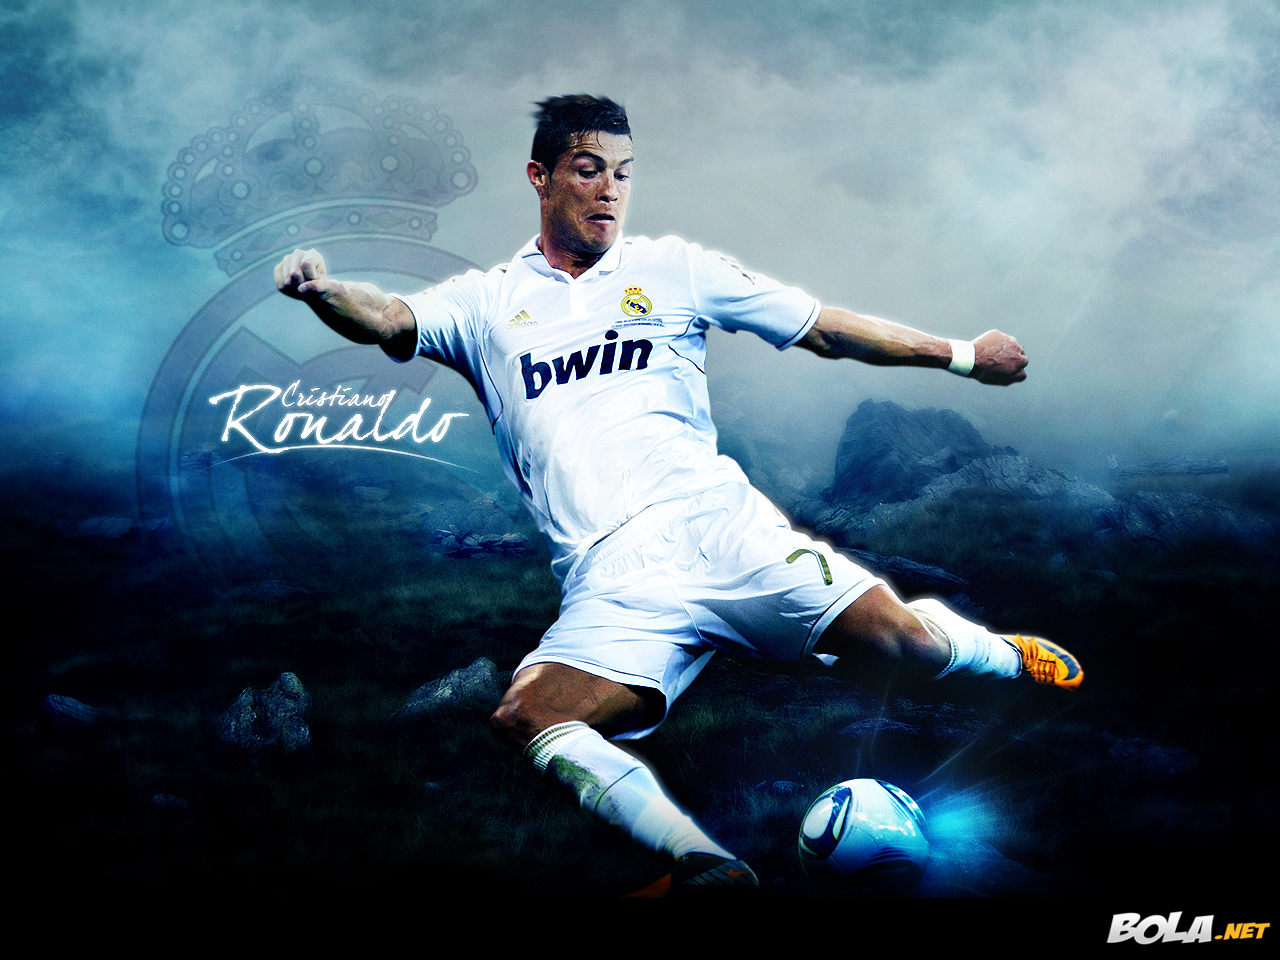 http://1.bp.blogspot.com/-8iYhhx_W3CY/UGQcKE92KQI/AAAAAAAAHMs/cC6LU4-eWMA/s1600/Cristiano-Ronaldo-2012-wallpaper-5.jpg